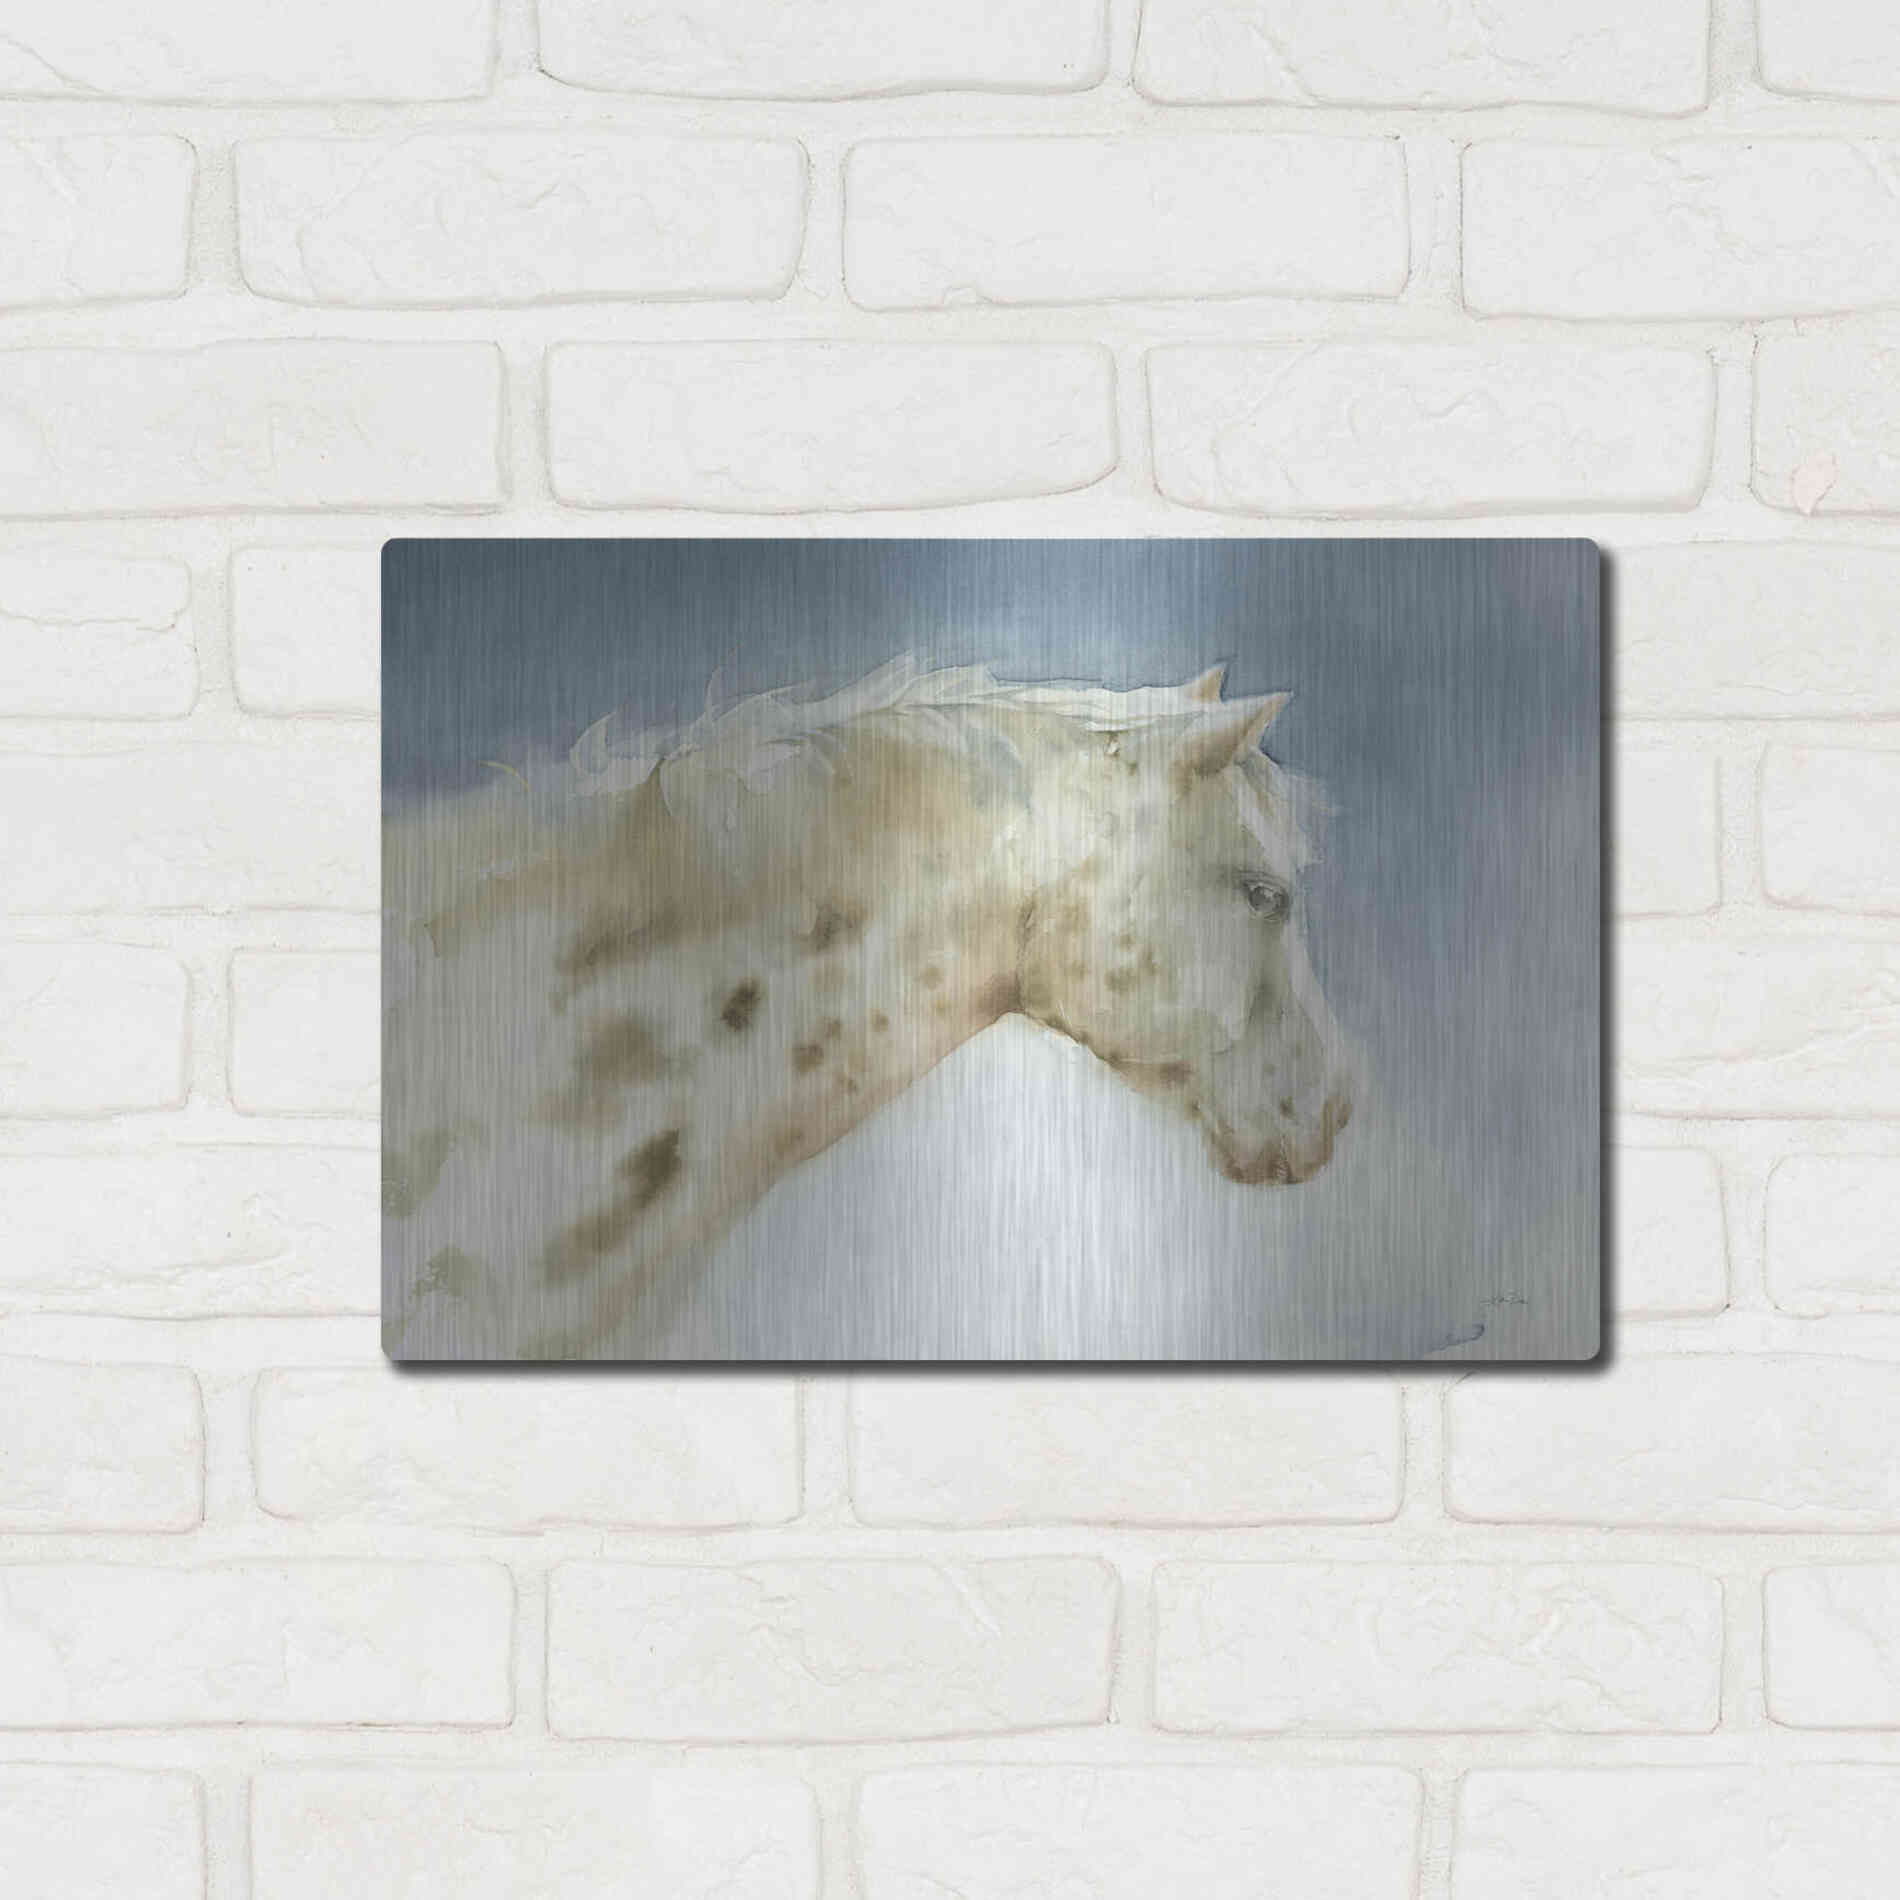 Luxe Metal Art 'Dapple Gray Horse' by Katrina Pete, Metal Wall Art,16x12